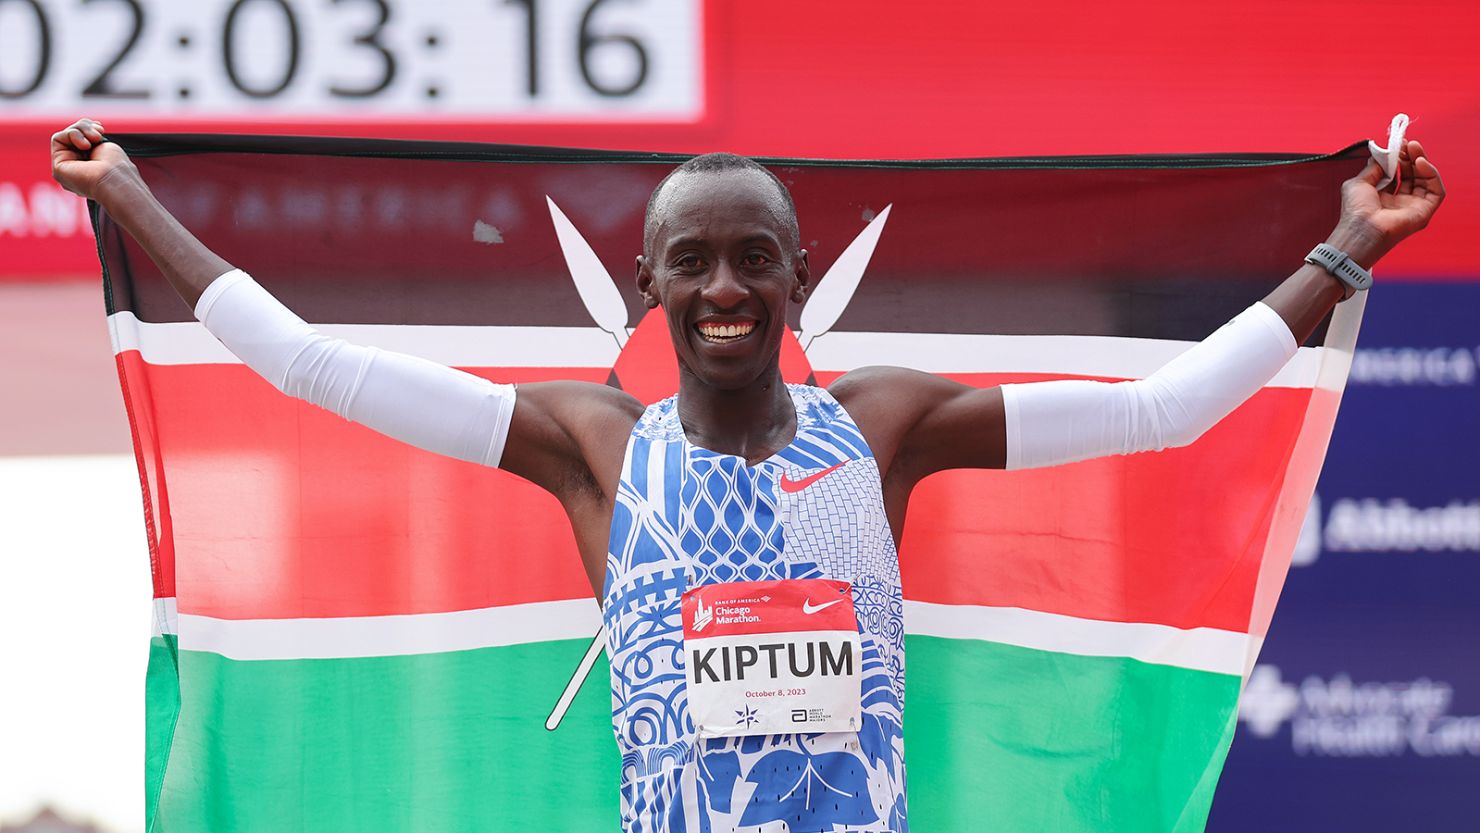 World marathon record holder Kevin Kiptum and coach killed in tragic car accident